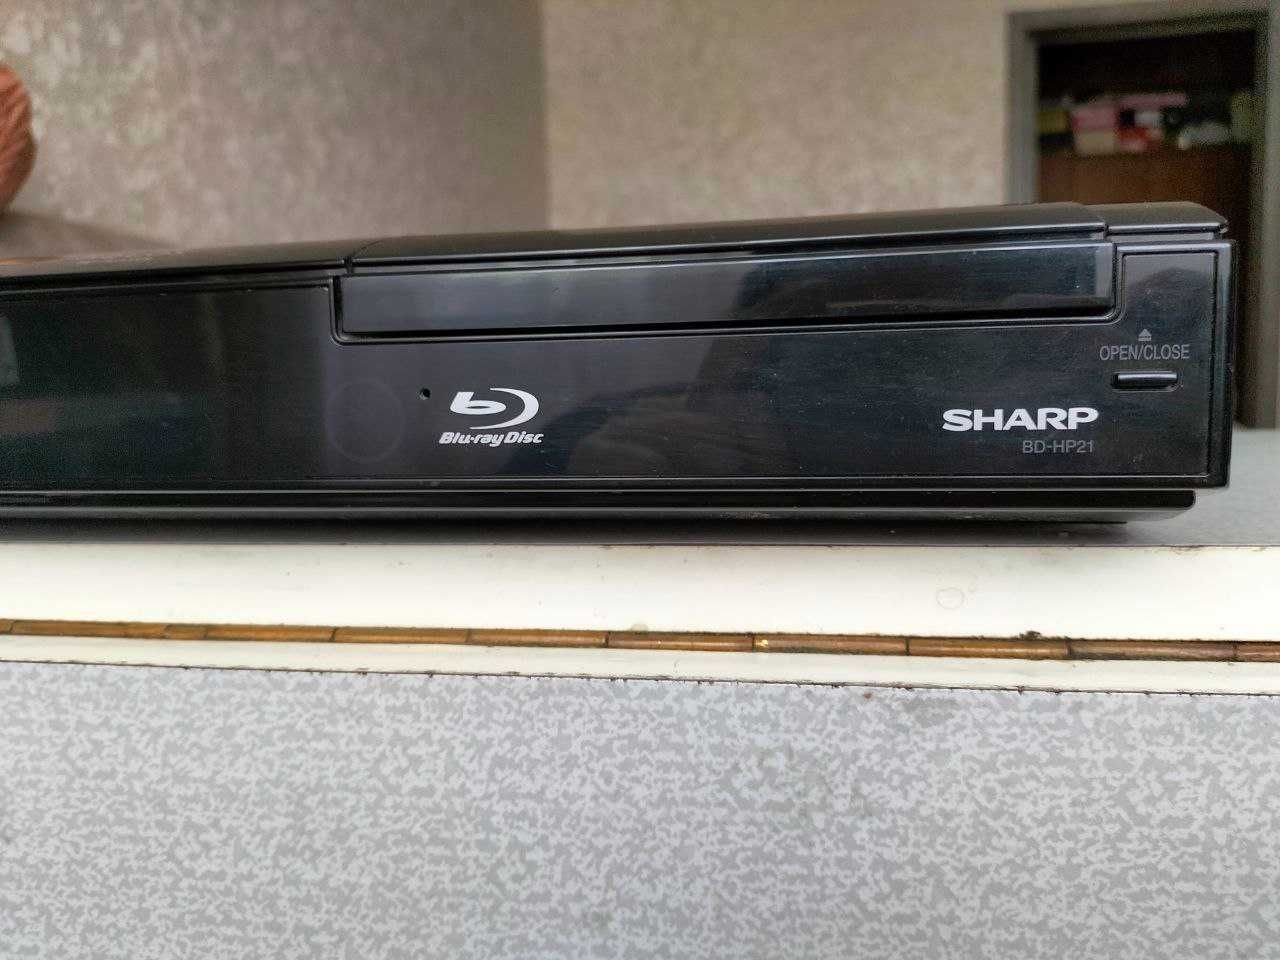 SHARP BD-HP21 Blu-ray